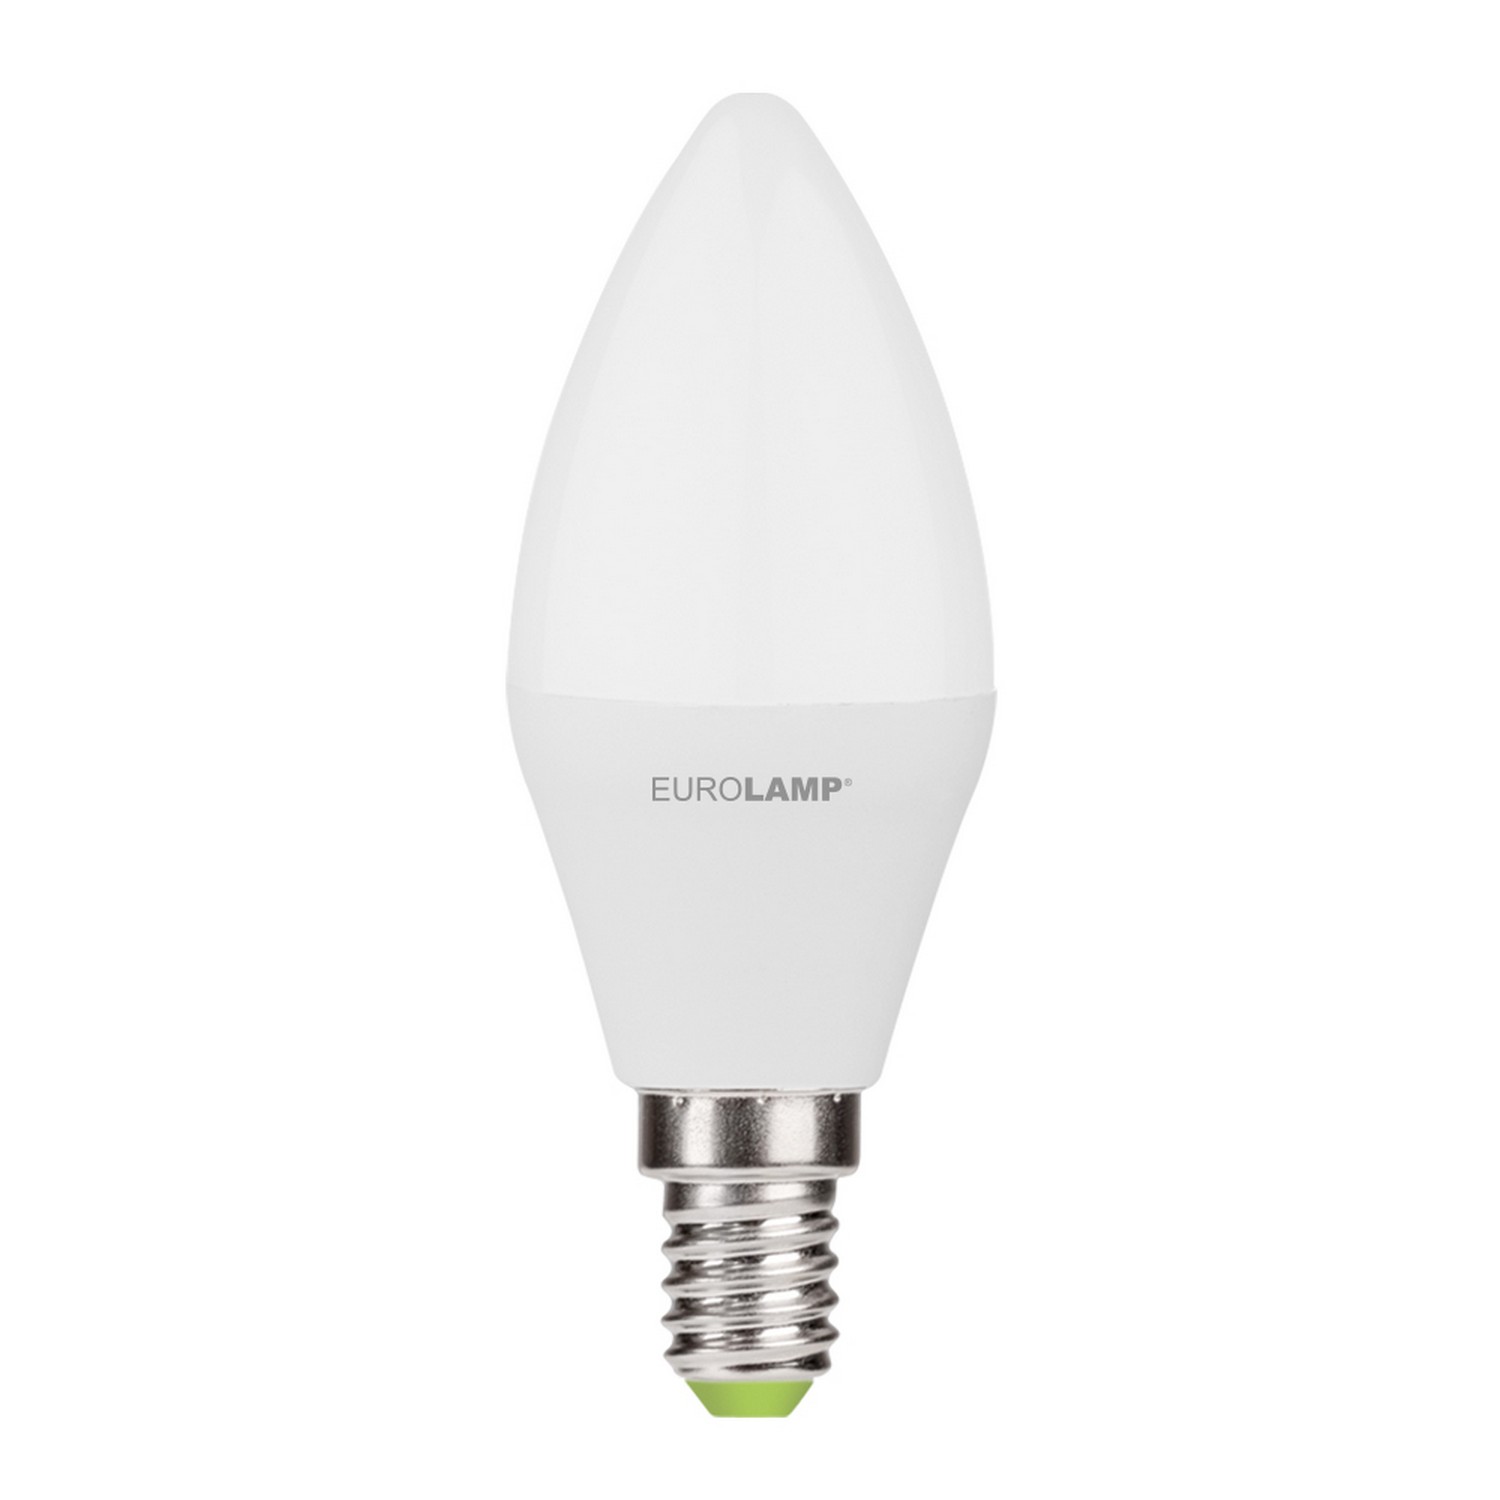 Лампа Eurolamp LED EKO Свічка 7W E14 3000K акція "1+1" ціна 0.00 грн - фотографія 2